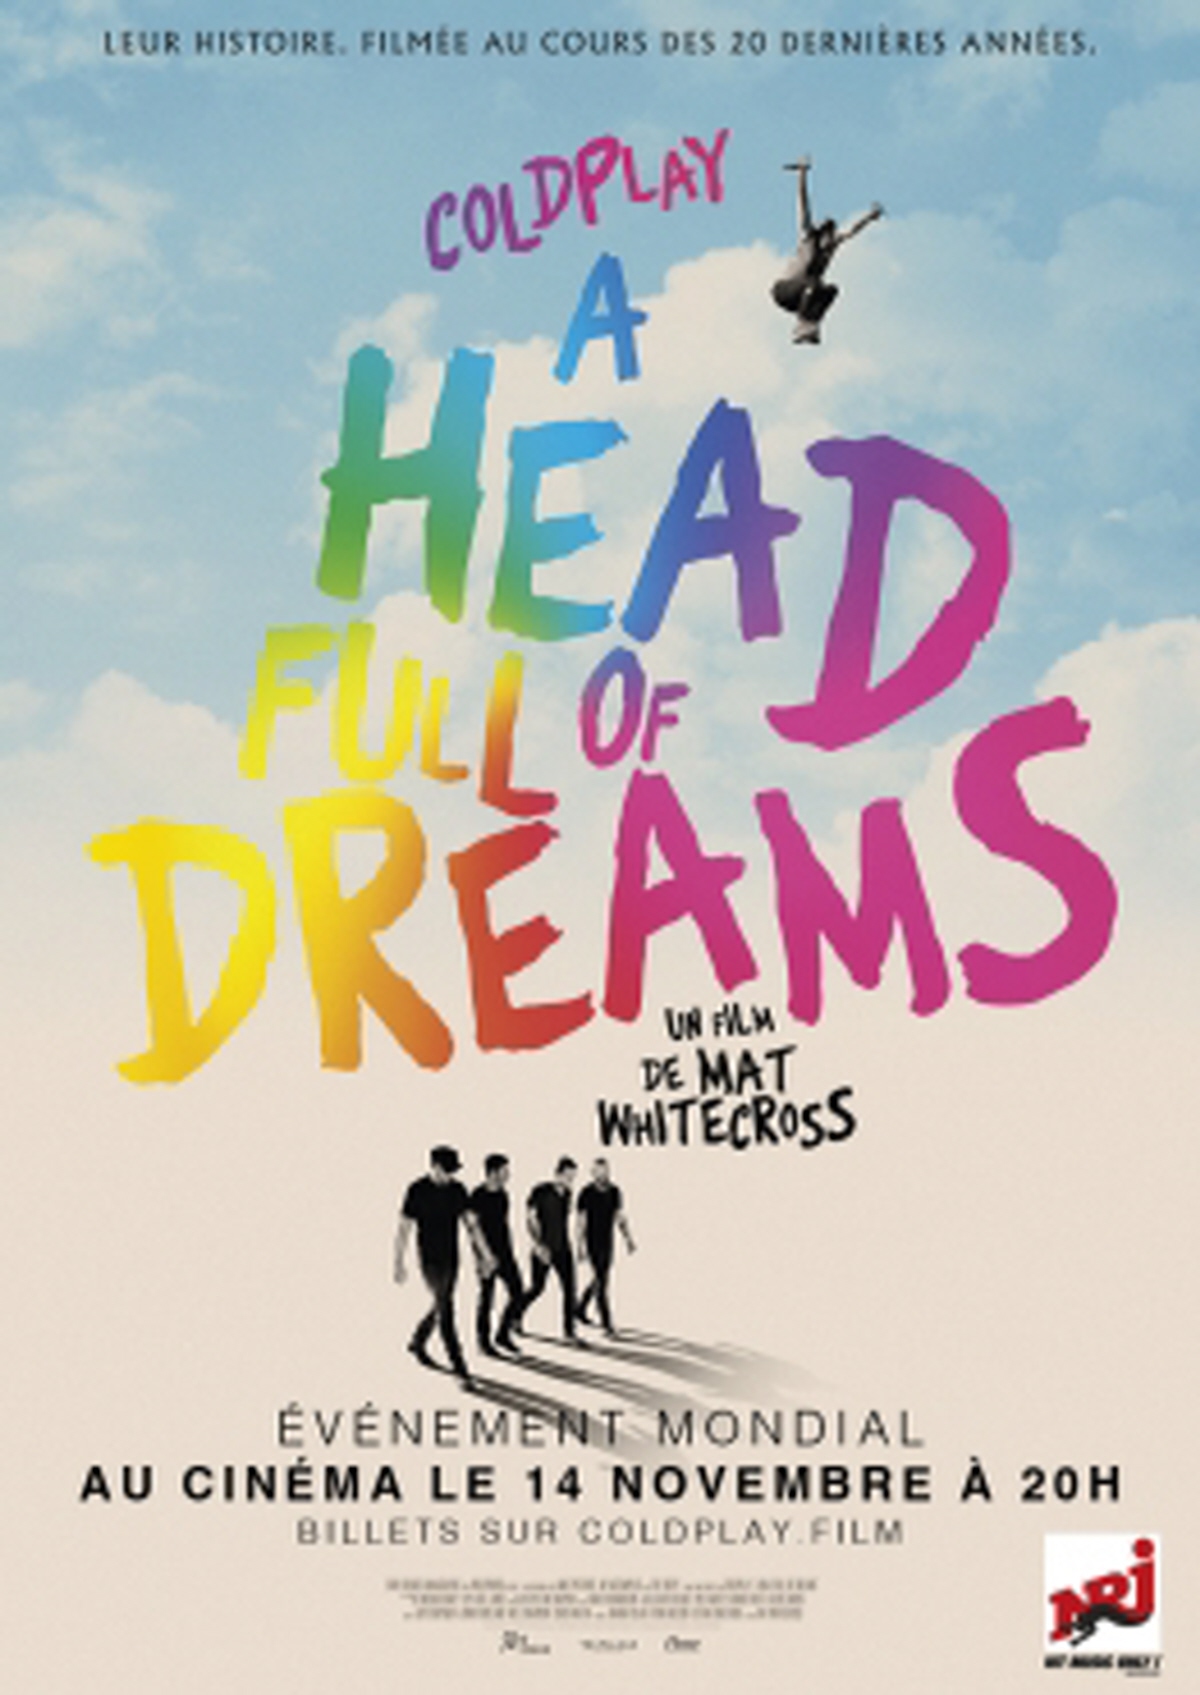 Coldplay, A Head Full of Dreams / Documentaire au Cinémarivaux